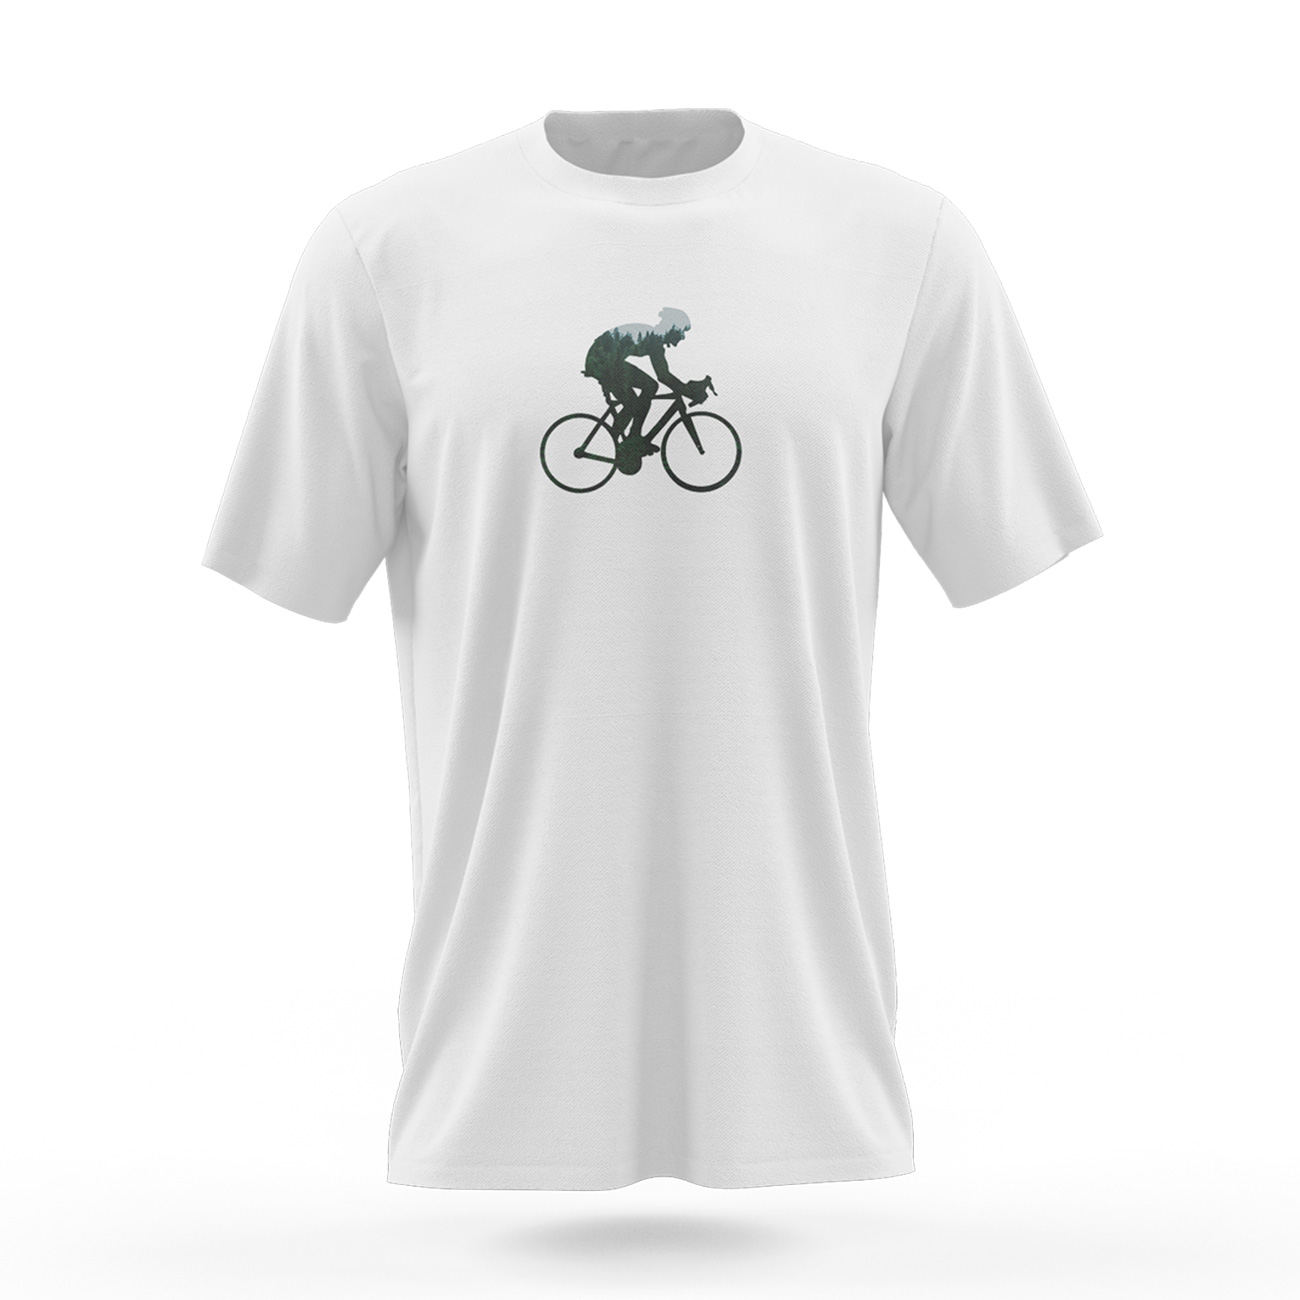 
                NU. BY HOLOKOLO Cyklistické triko s krátkým rukávem - BEHIND BARS - zelená/bílá S
            